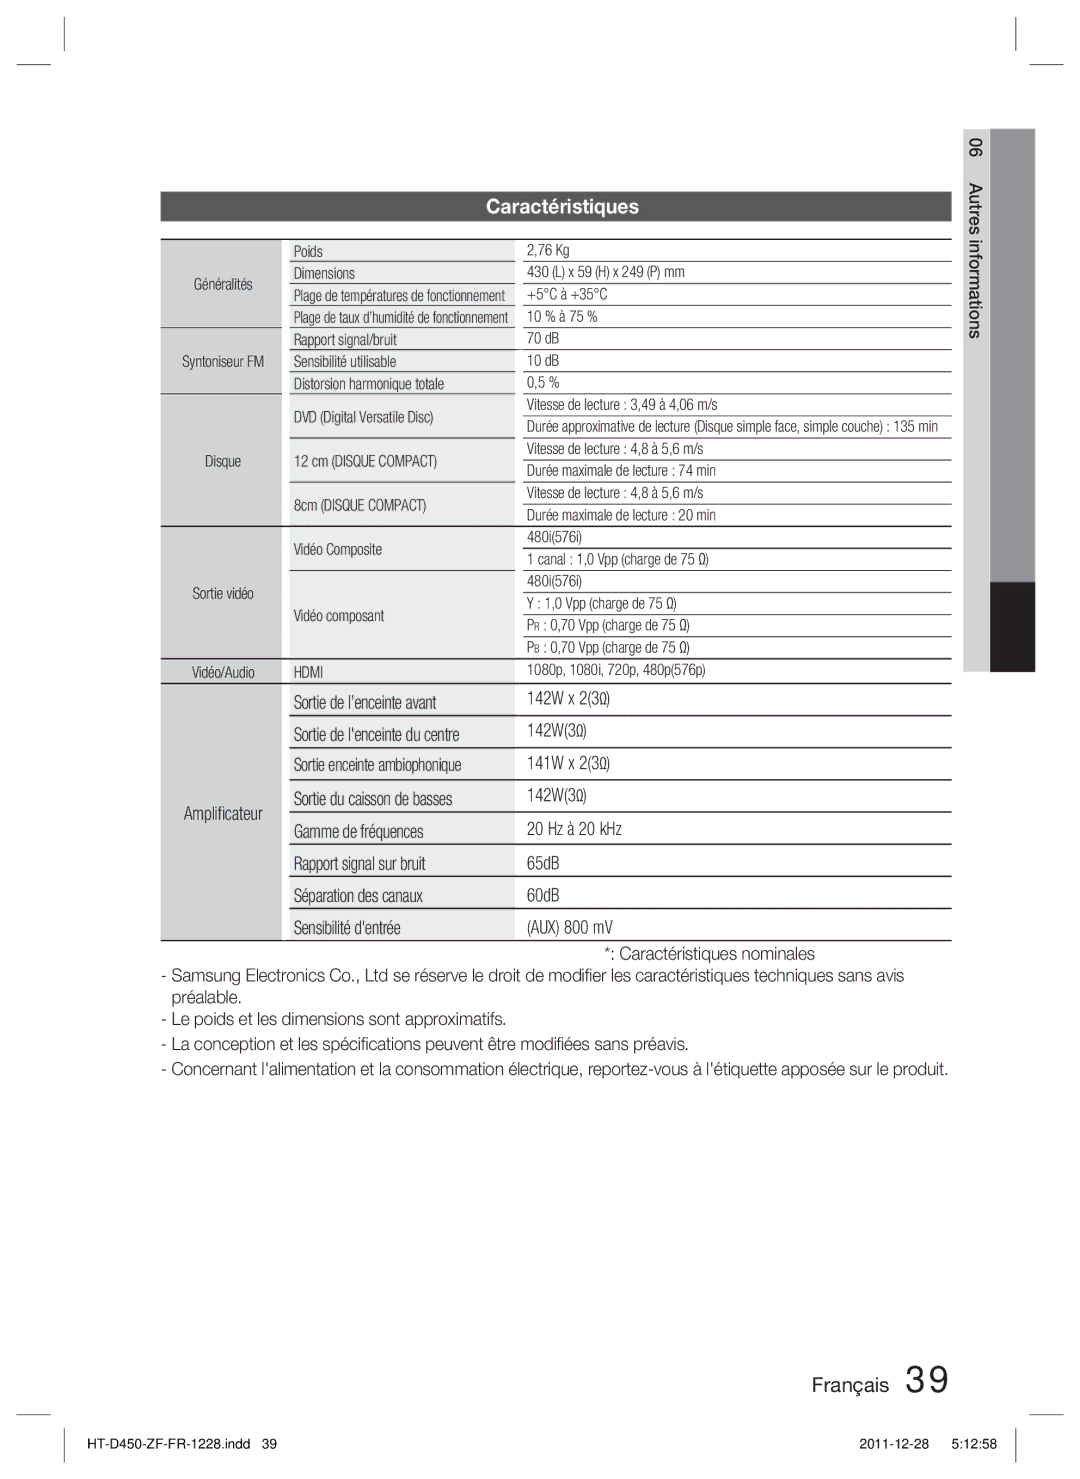 Samsung HT-D455/ZF manual Caractéristiques, Sortie de l’enceinte avant 142W x 23Ω, 142W3Ω, 141W x 23Ω 